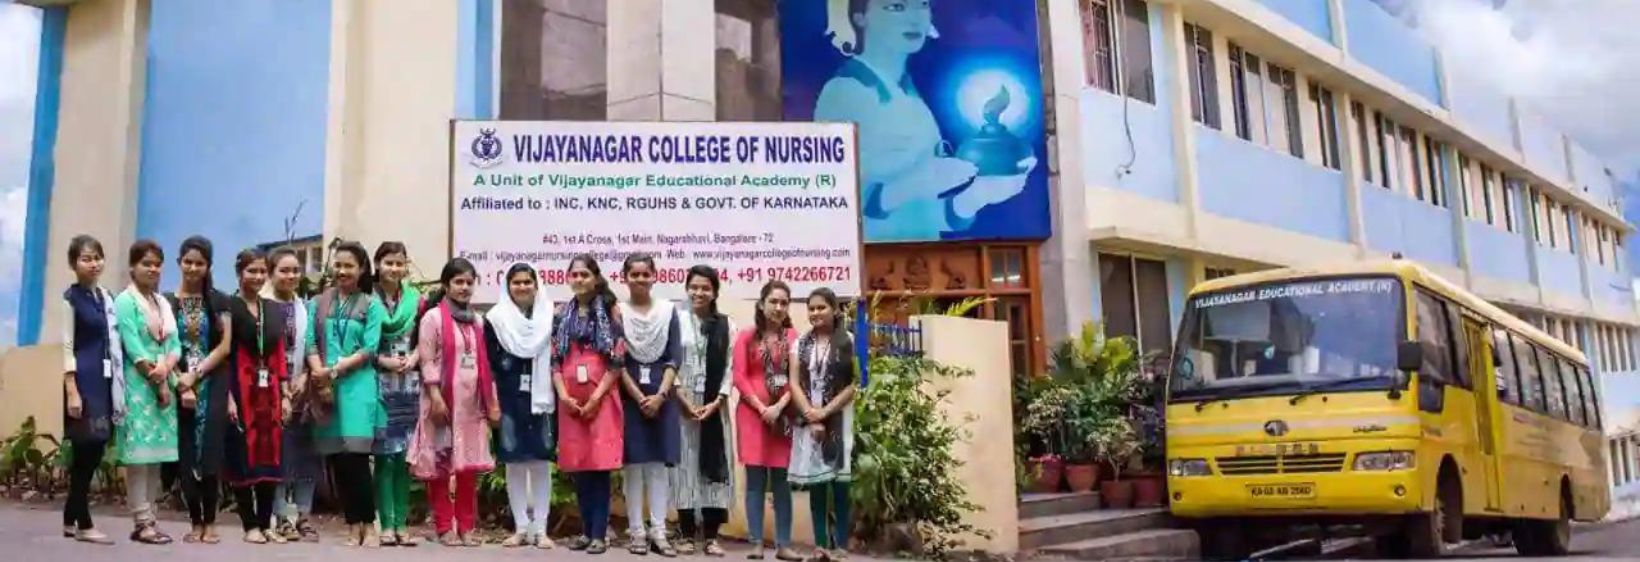 Vijayanagar College of Nursing - Bangalore